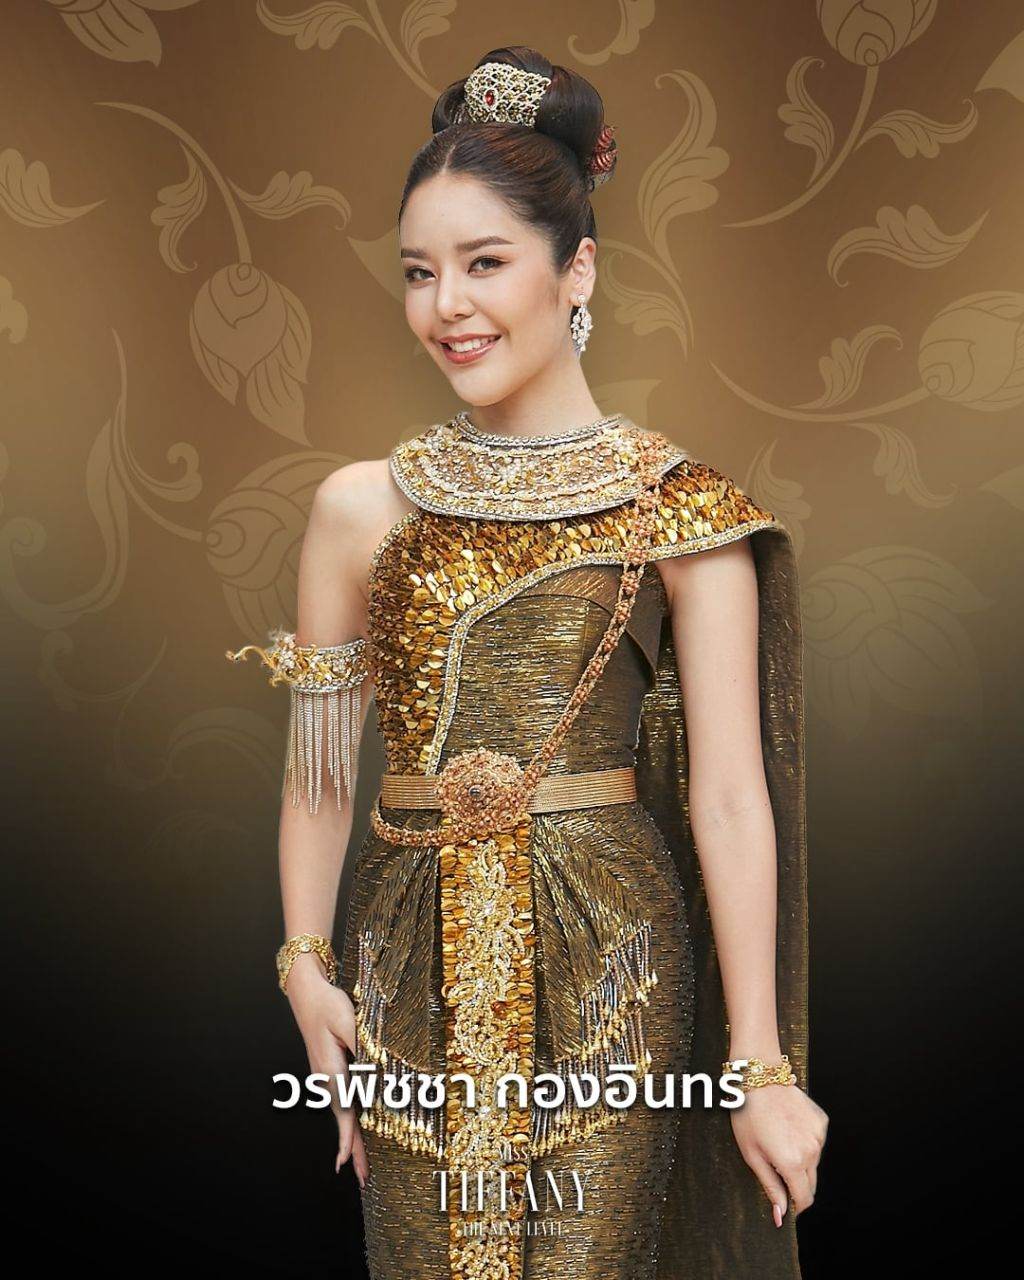 THAILAND 🇹🇭 | ชุดไทยจักรี by Miss Tiffany's Universe 2020